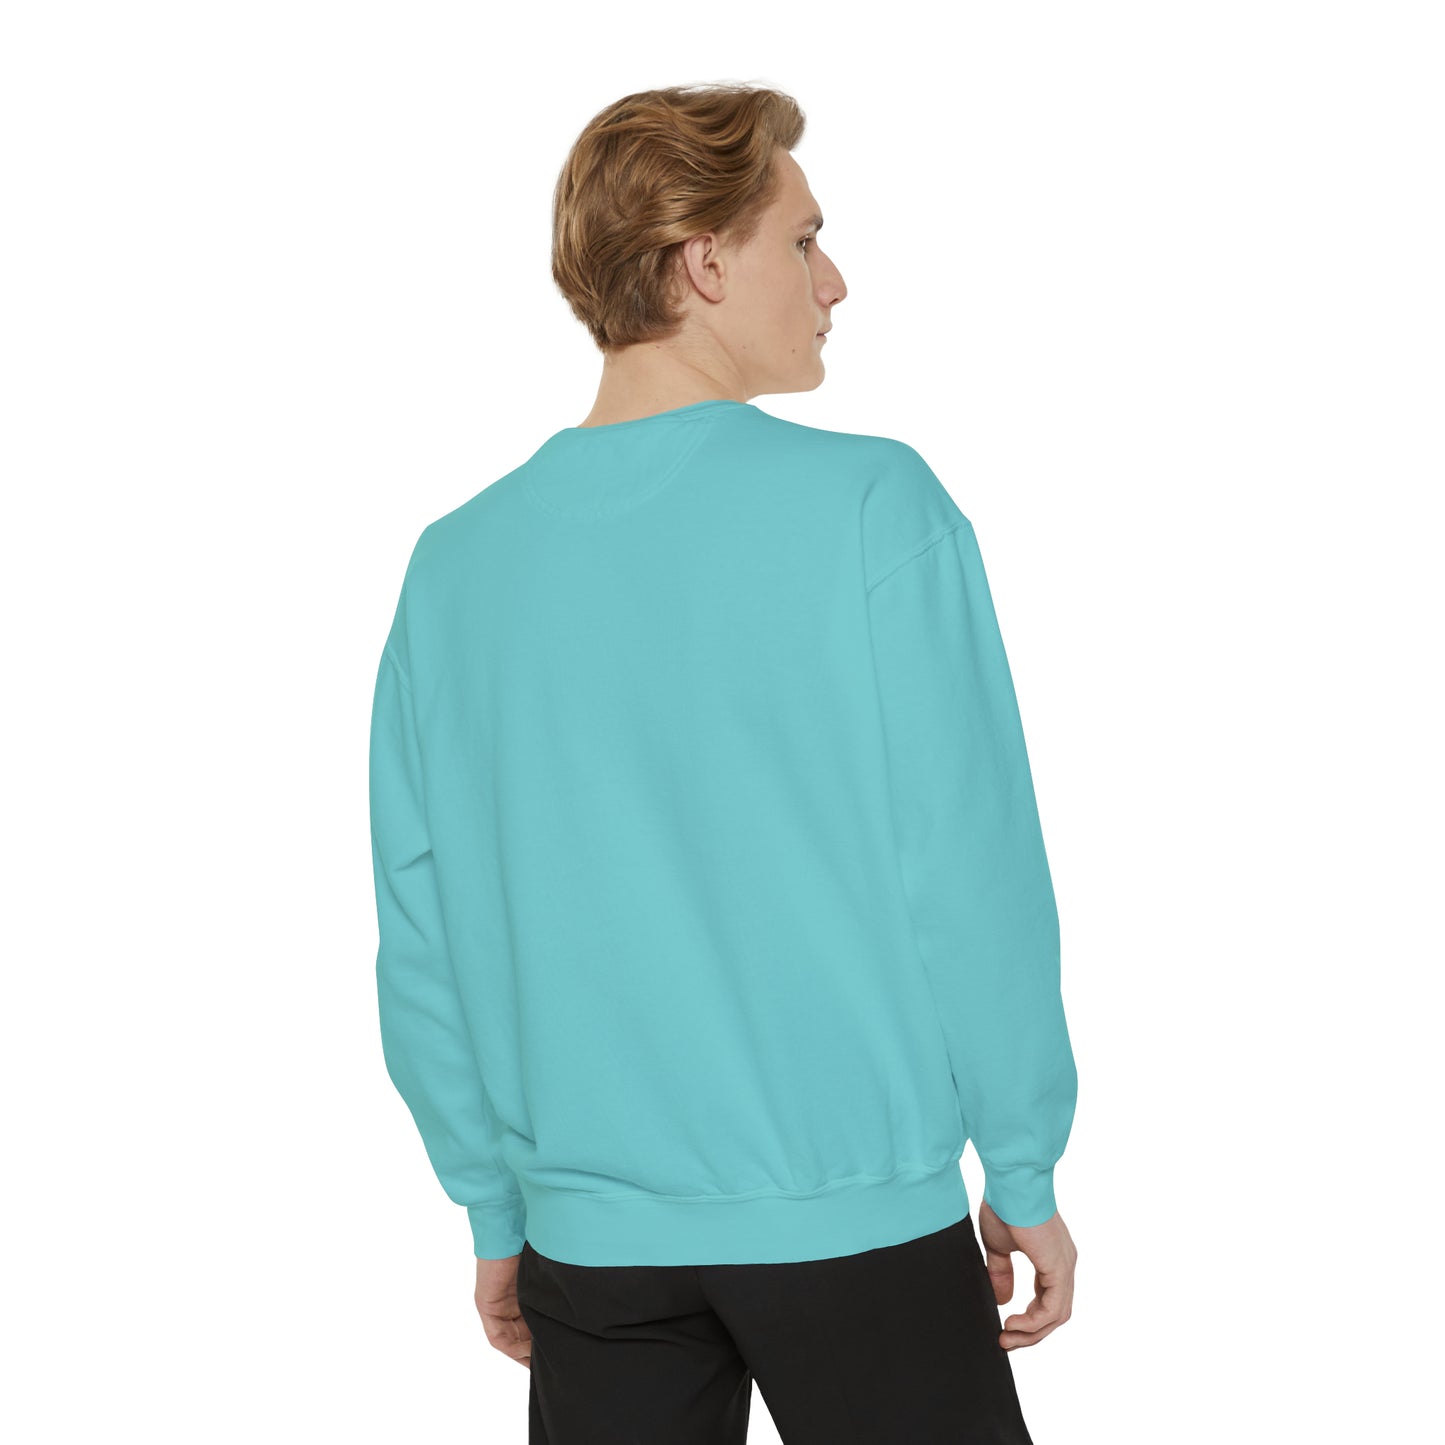 Goalgetter Unisex Garment-Dyed Sweatshirt